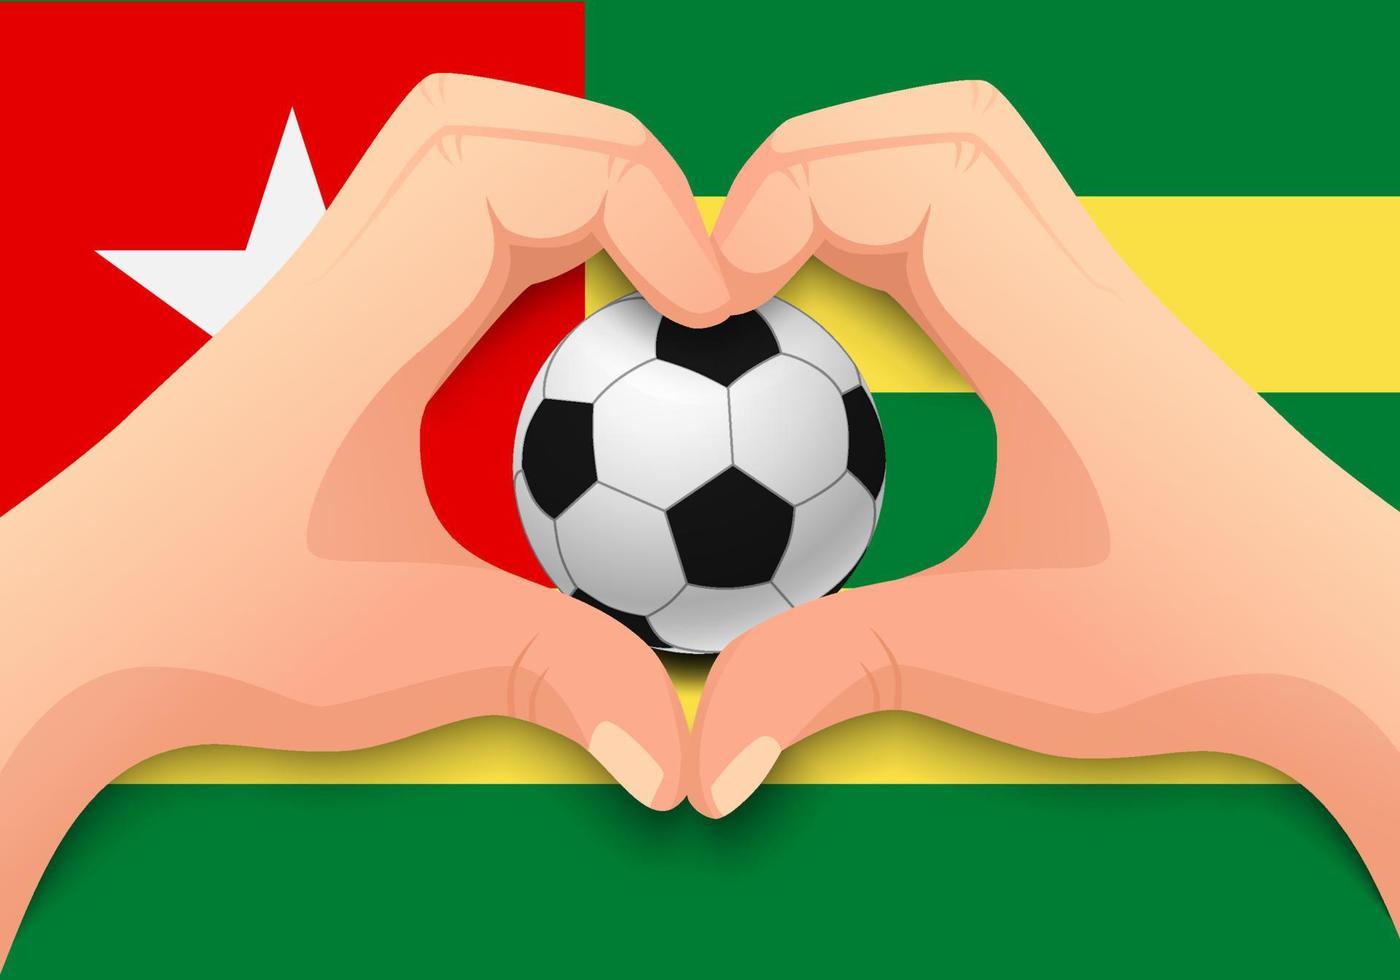 Togo soccer ball and hand heart shape vector